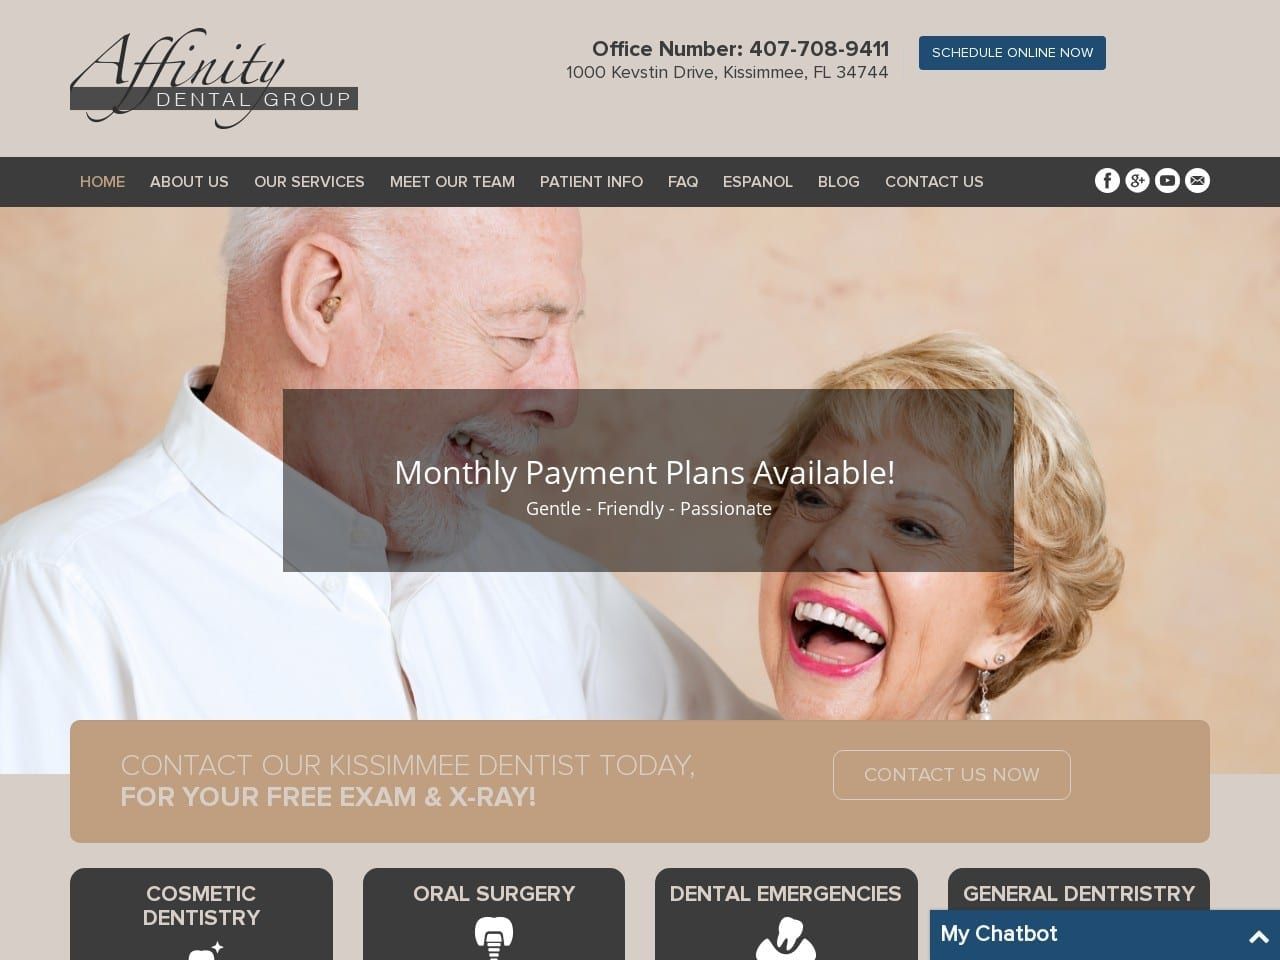 Affinity Dental Website Screenshot from affinitydental.net